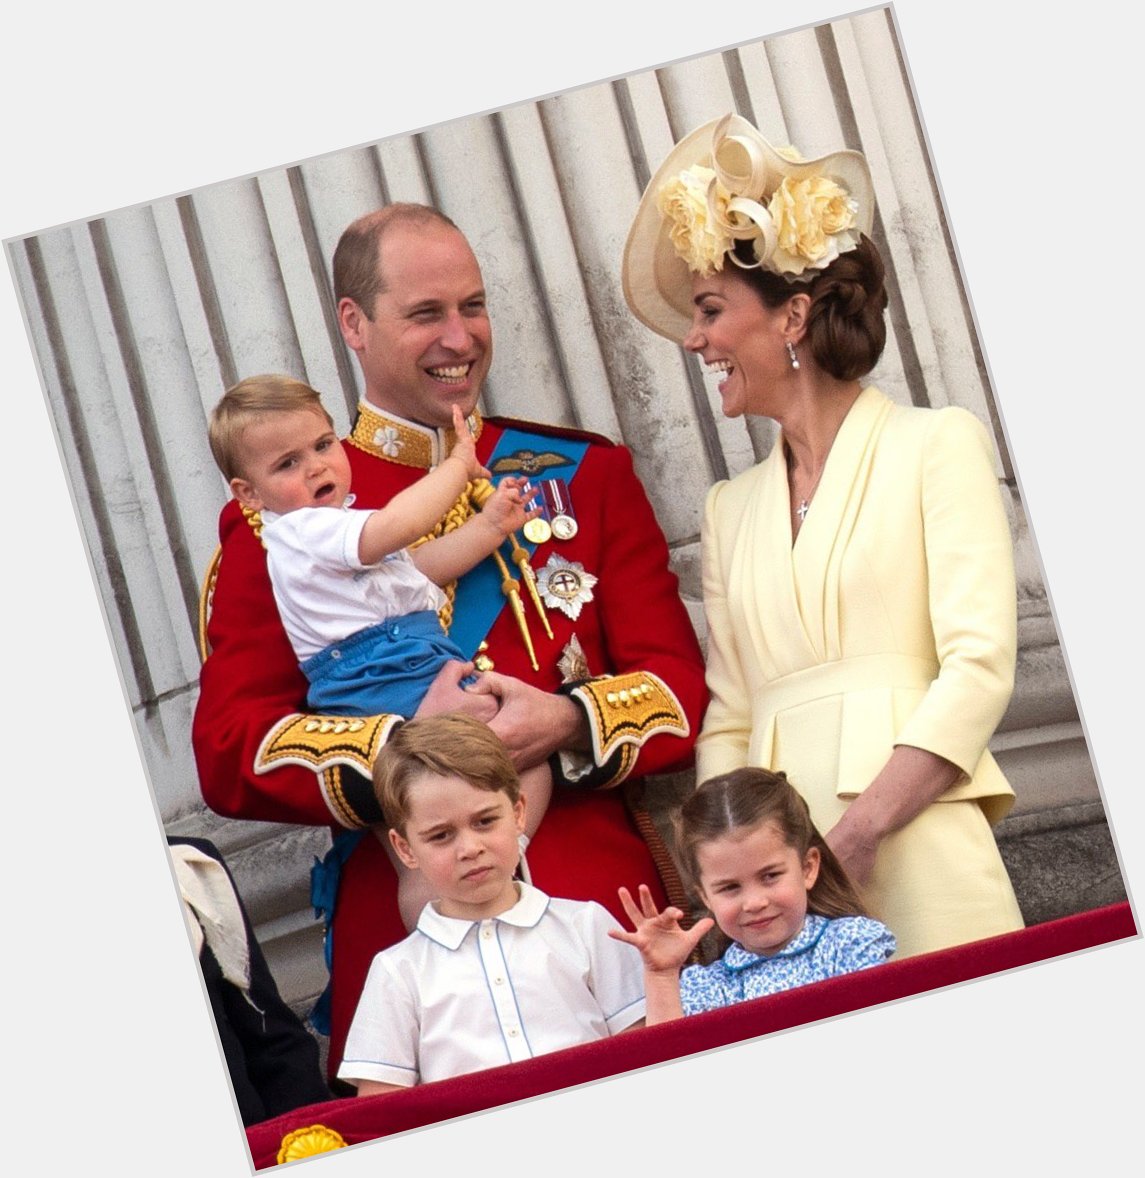 Happy 37th Birthday to HRH Prince William, Duke of Cambridge! 